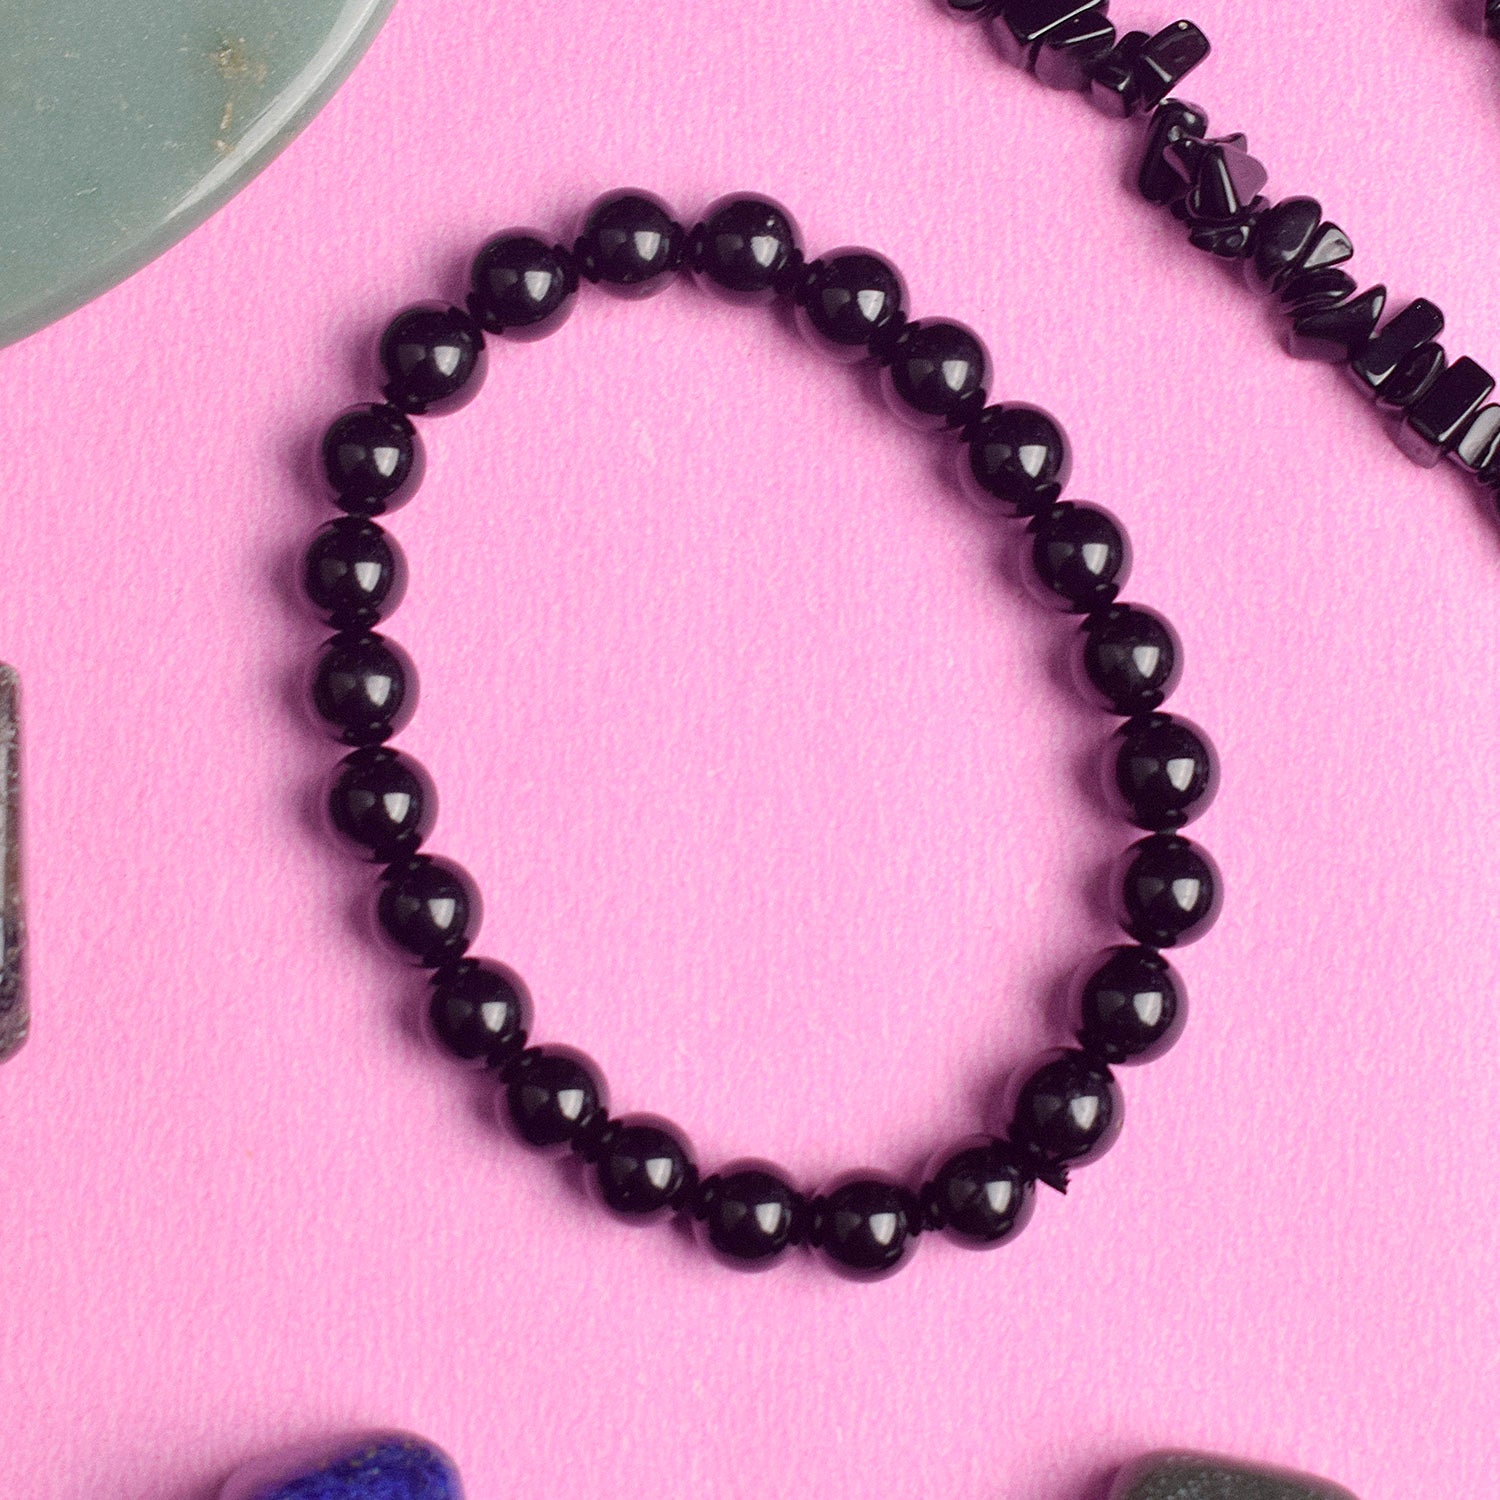 Grade A++ Black Onyx Bead Bracelet 8mm, Genuine Black Onyx Gemstone Bracelet  | eBay